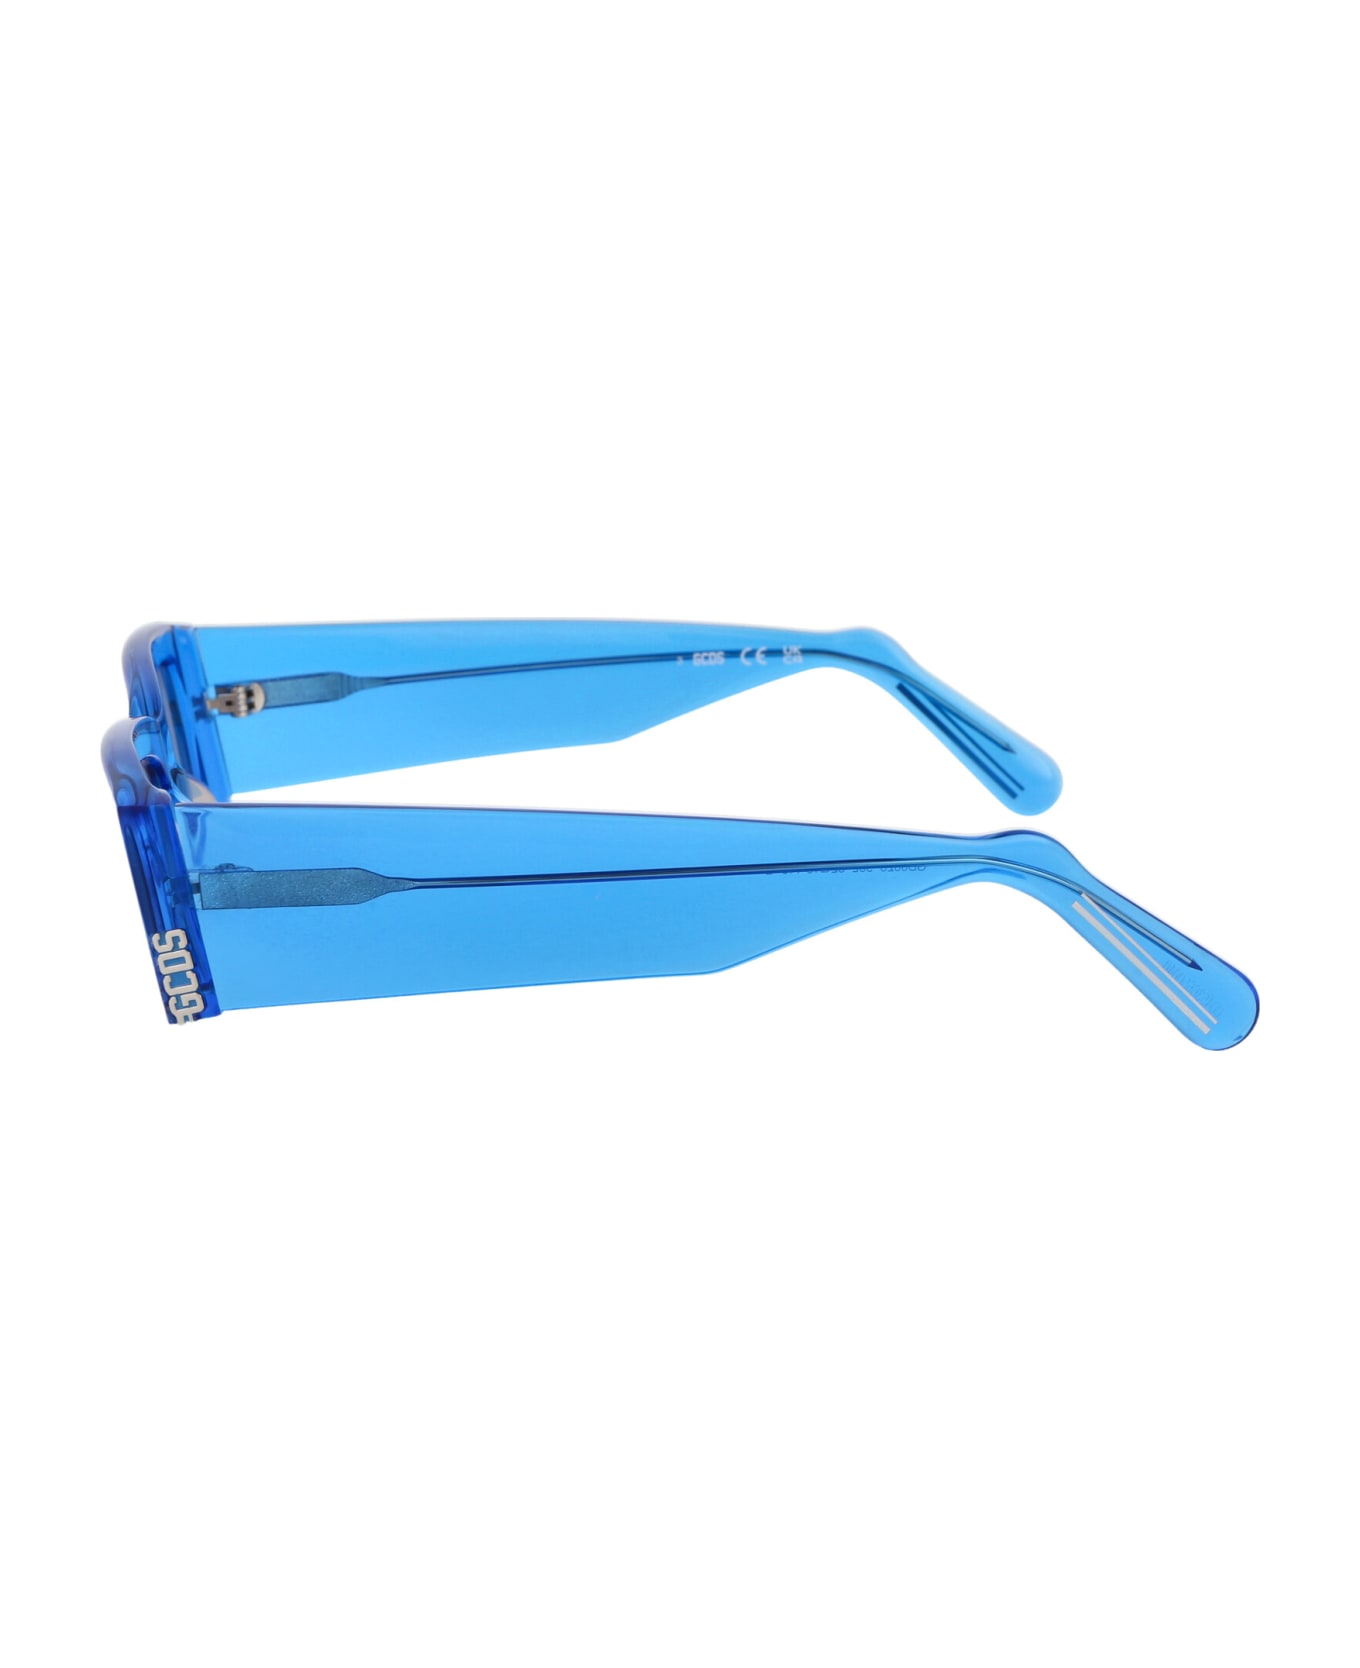 GCDS Gd0020 Sunglasses - 90L BLUE